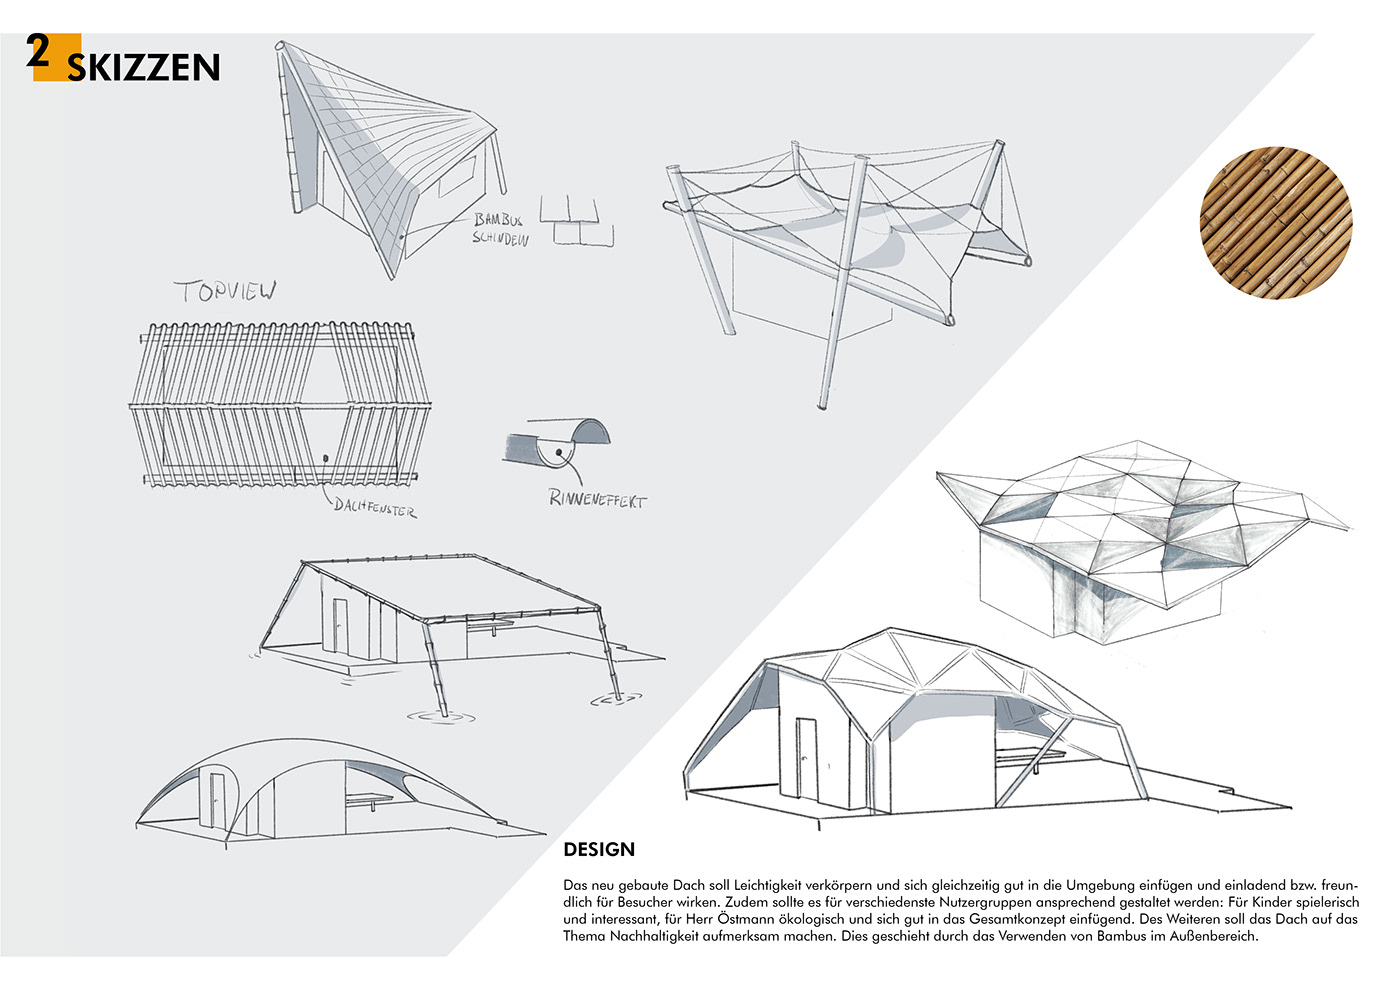 bamboo design gewichtsobtimiert house lightweight lightweight architecture lightweight design lightweight structure